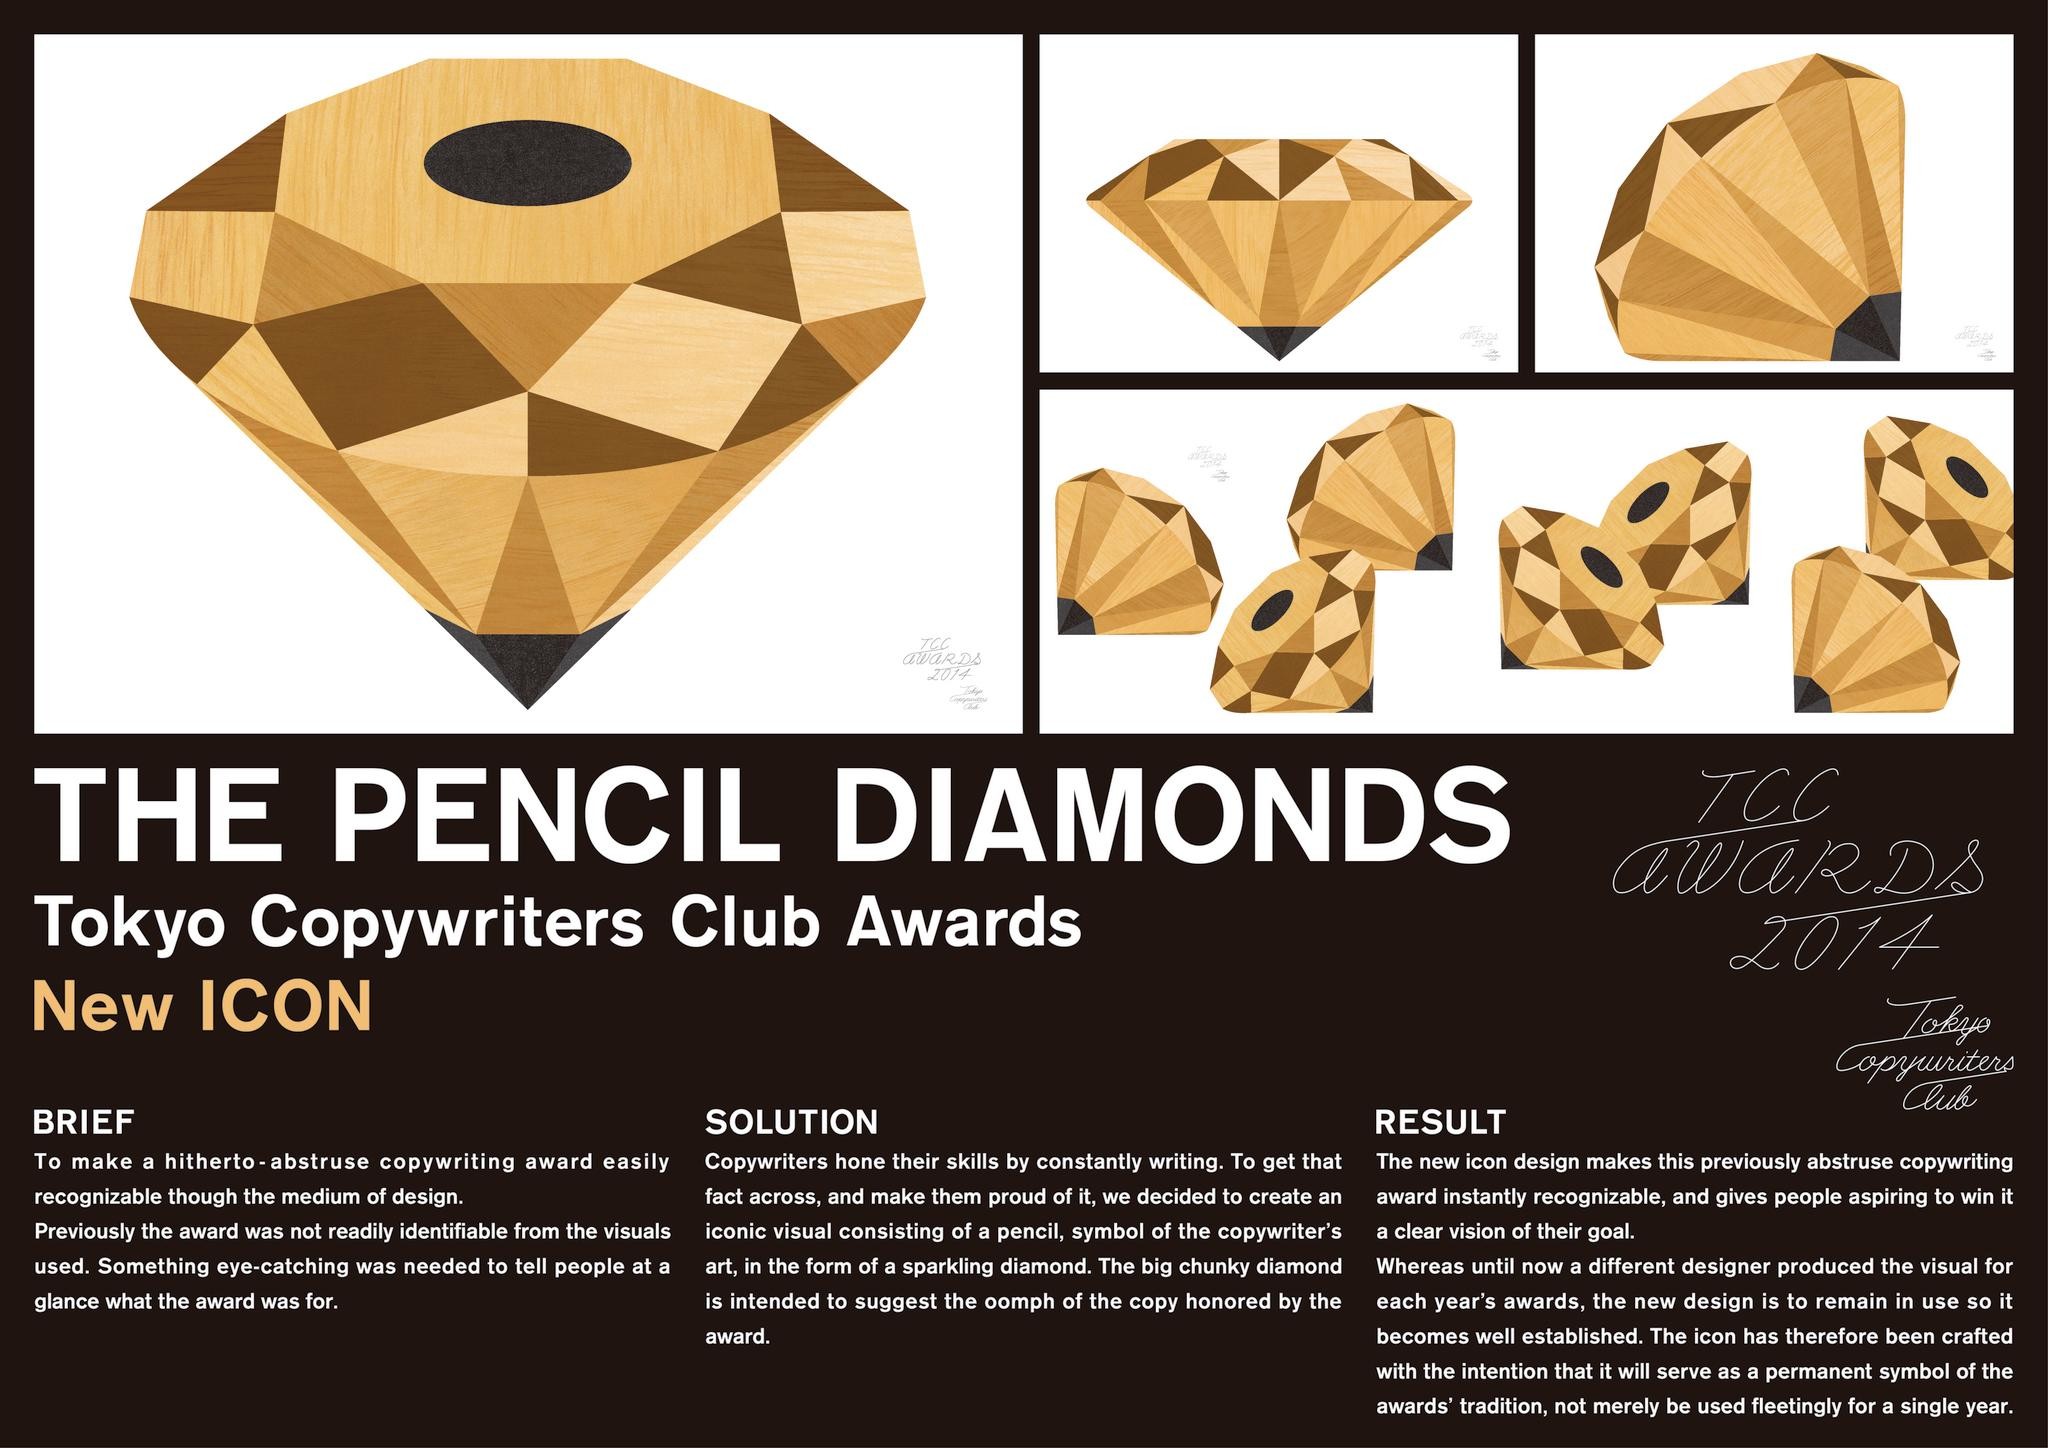 THE PENCIL DIAMONDS